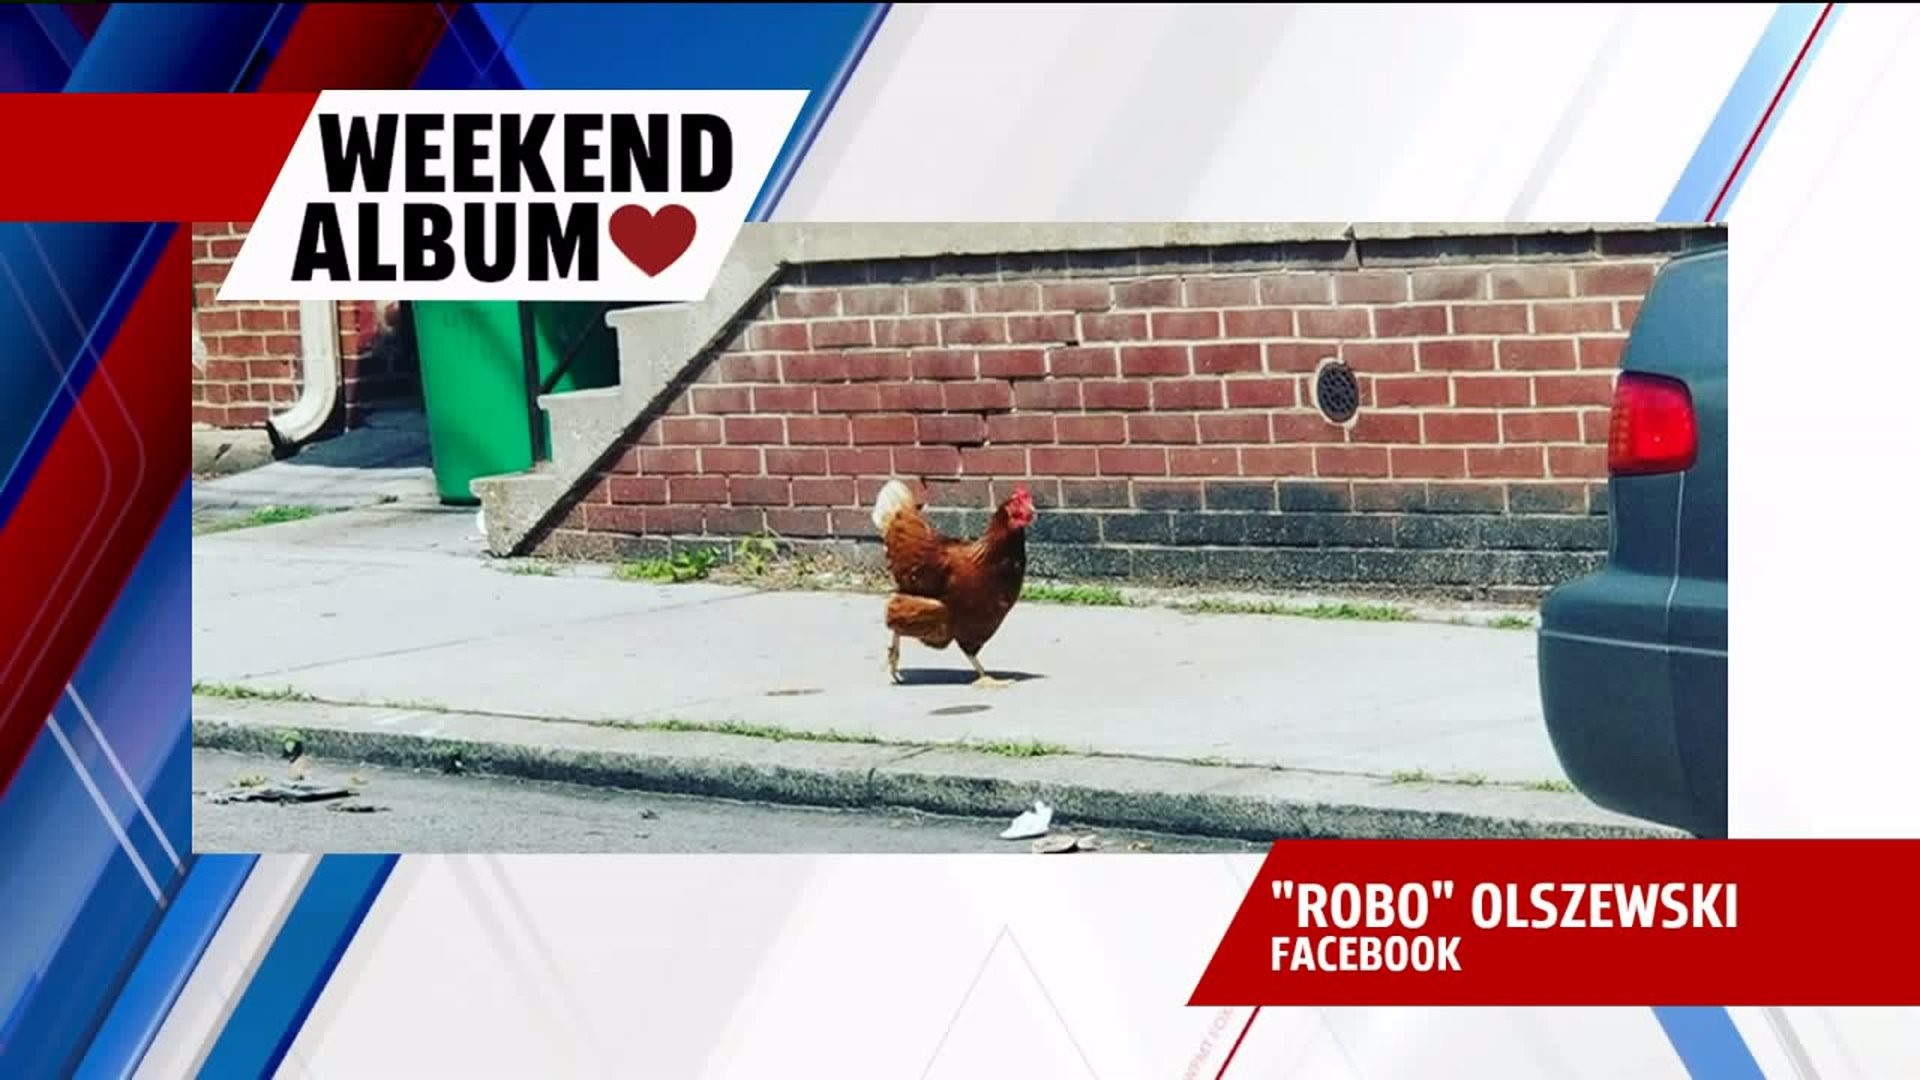 WEEKEND ALBUM:  Chicken walking in York City